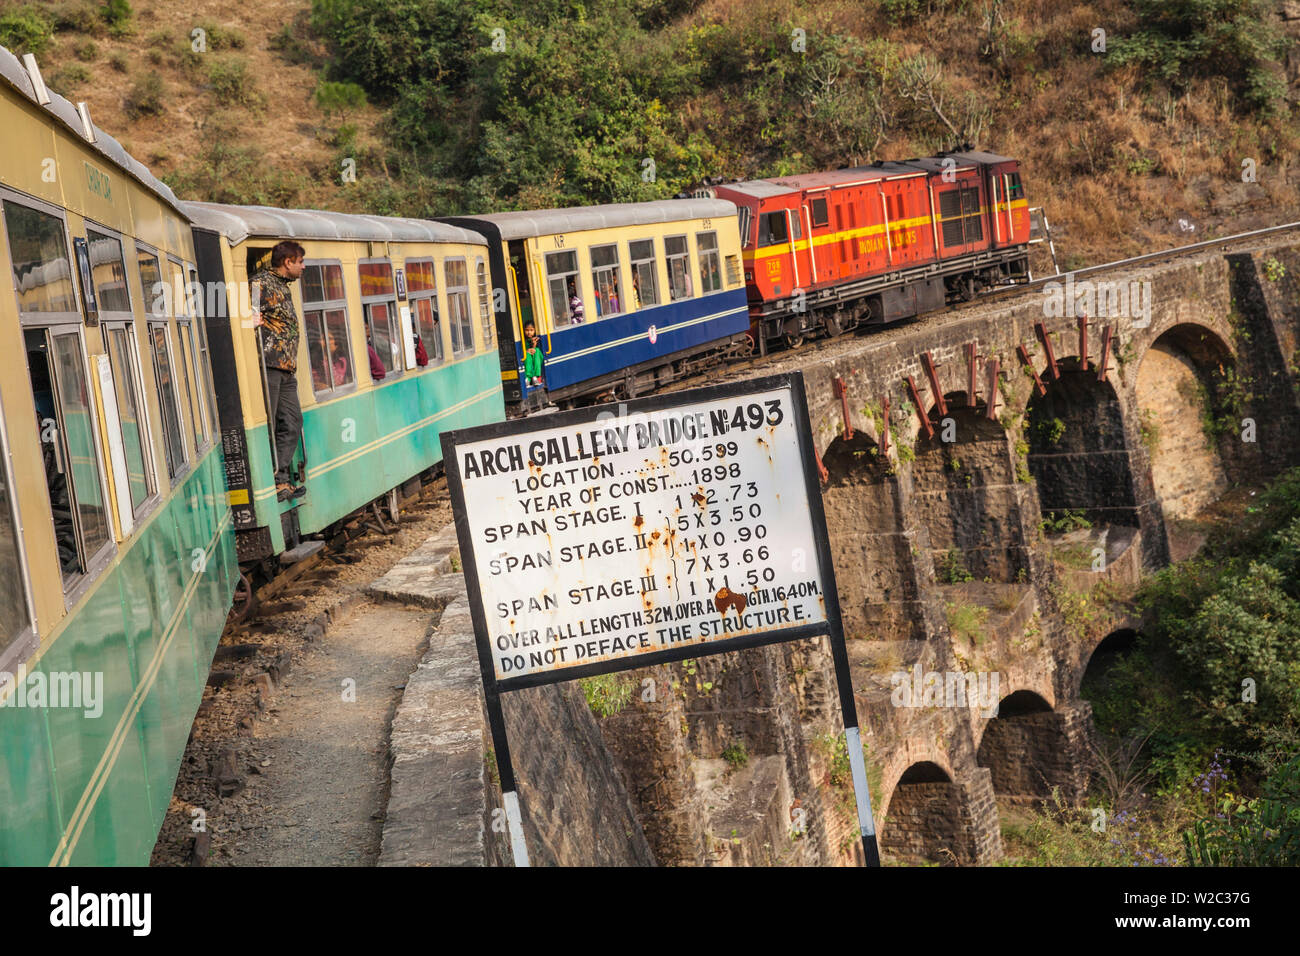 India, North-West India , The Kalkaâ€“Shimla Railway, The Himalaya Queen toy train, Arch gallery bridge no 493 Stock Photo